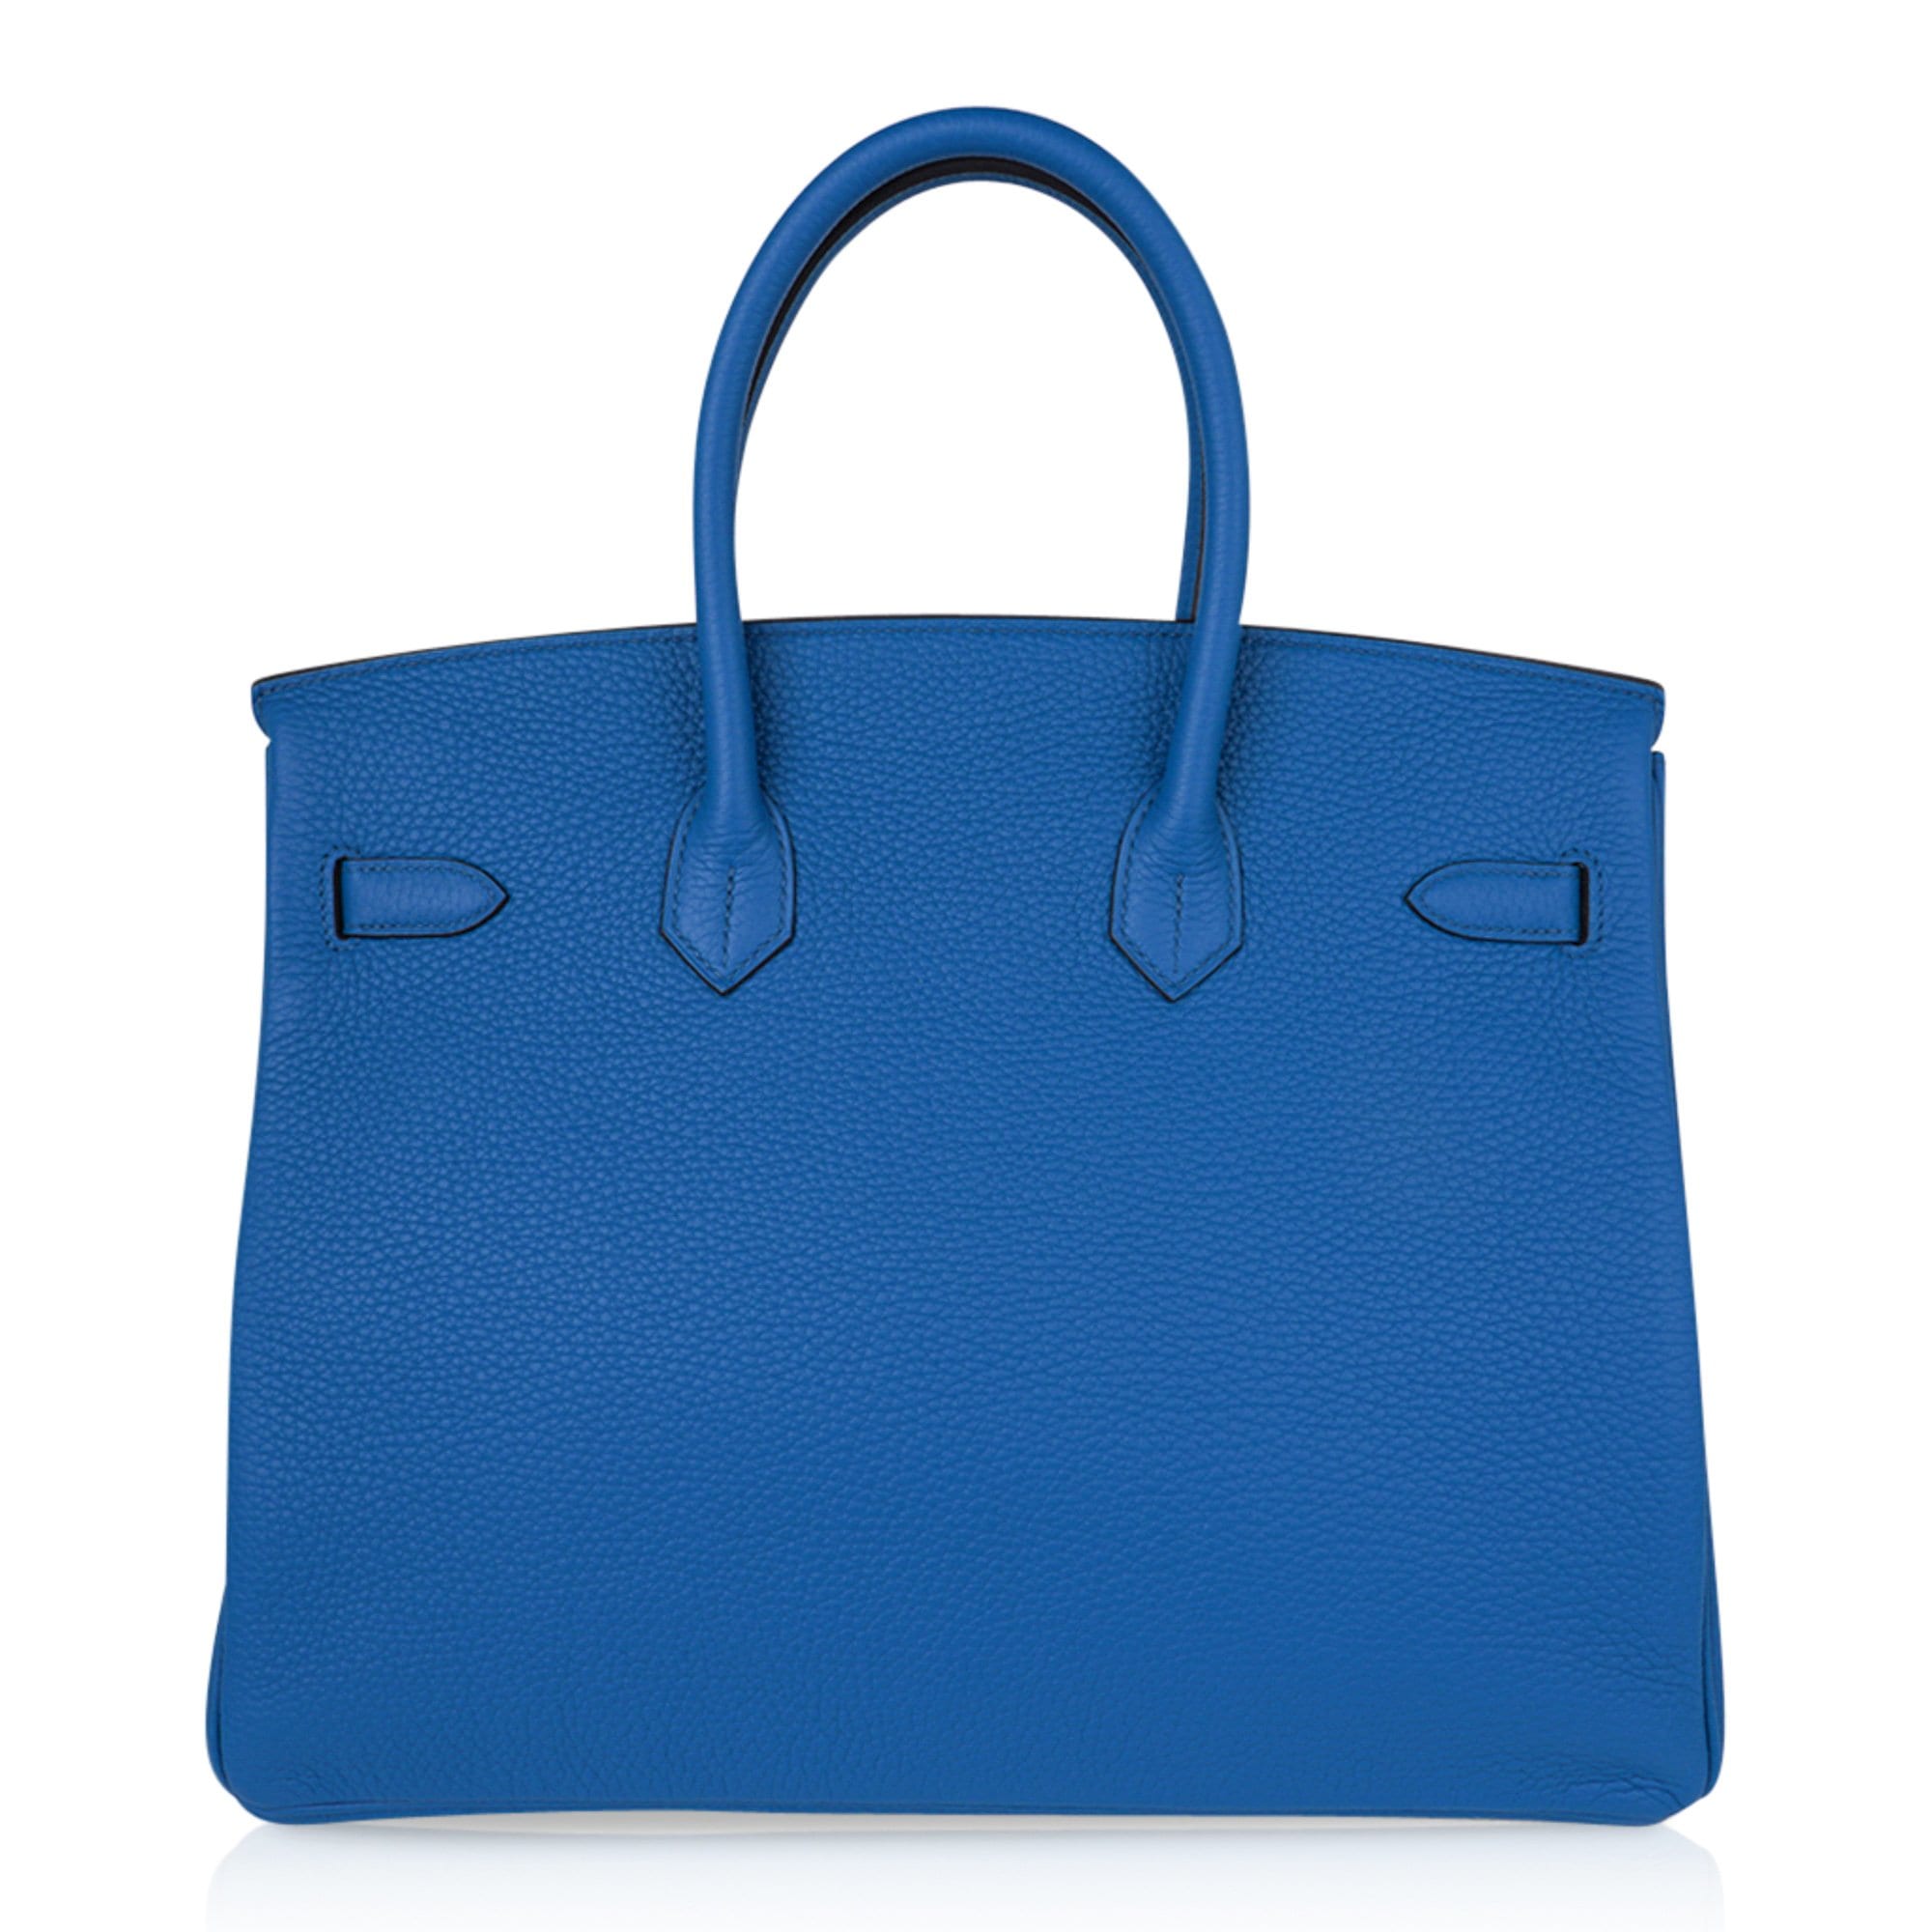 Birkin 35 Blue Jean Colour in Togo Leather with palladium hardware